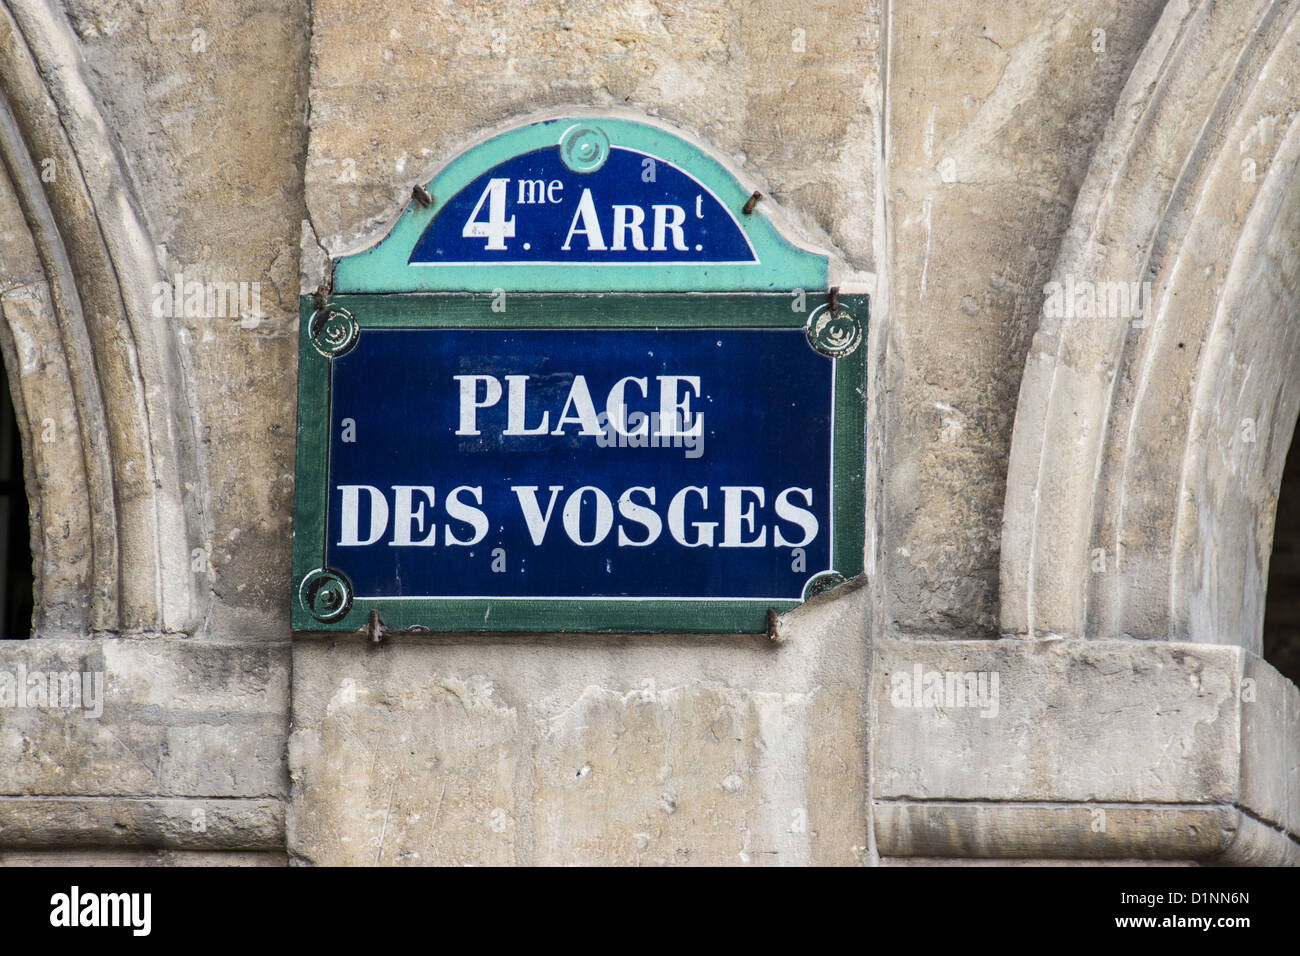 Place des Vosges street sign in Paris France Europe Stock Photo